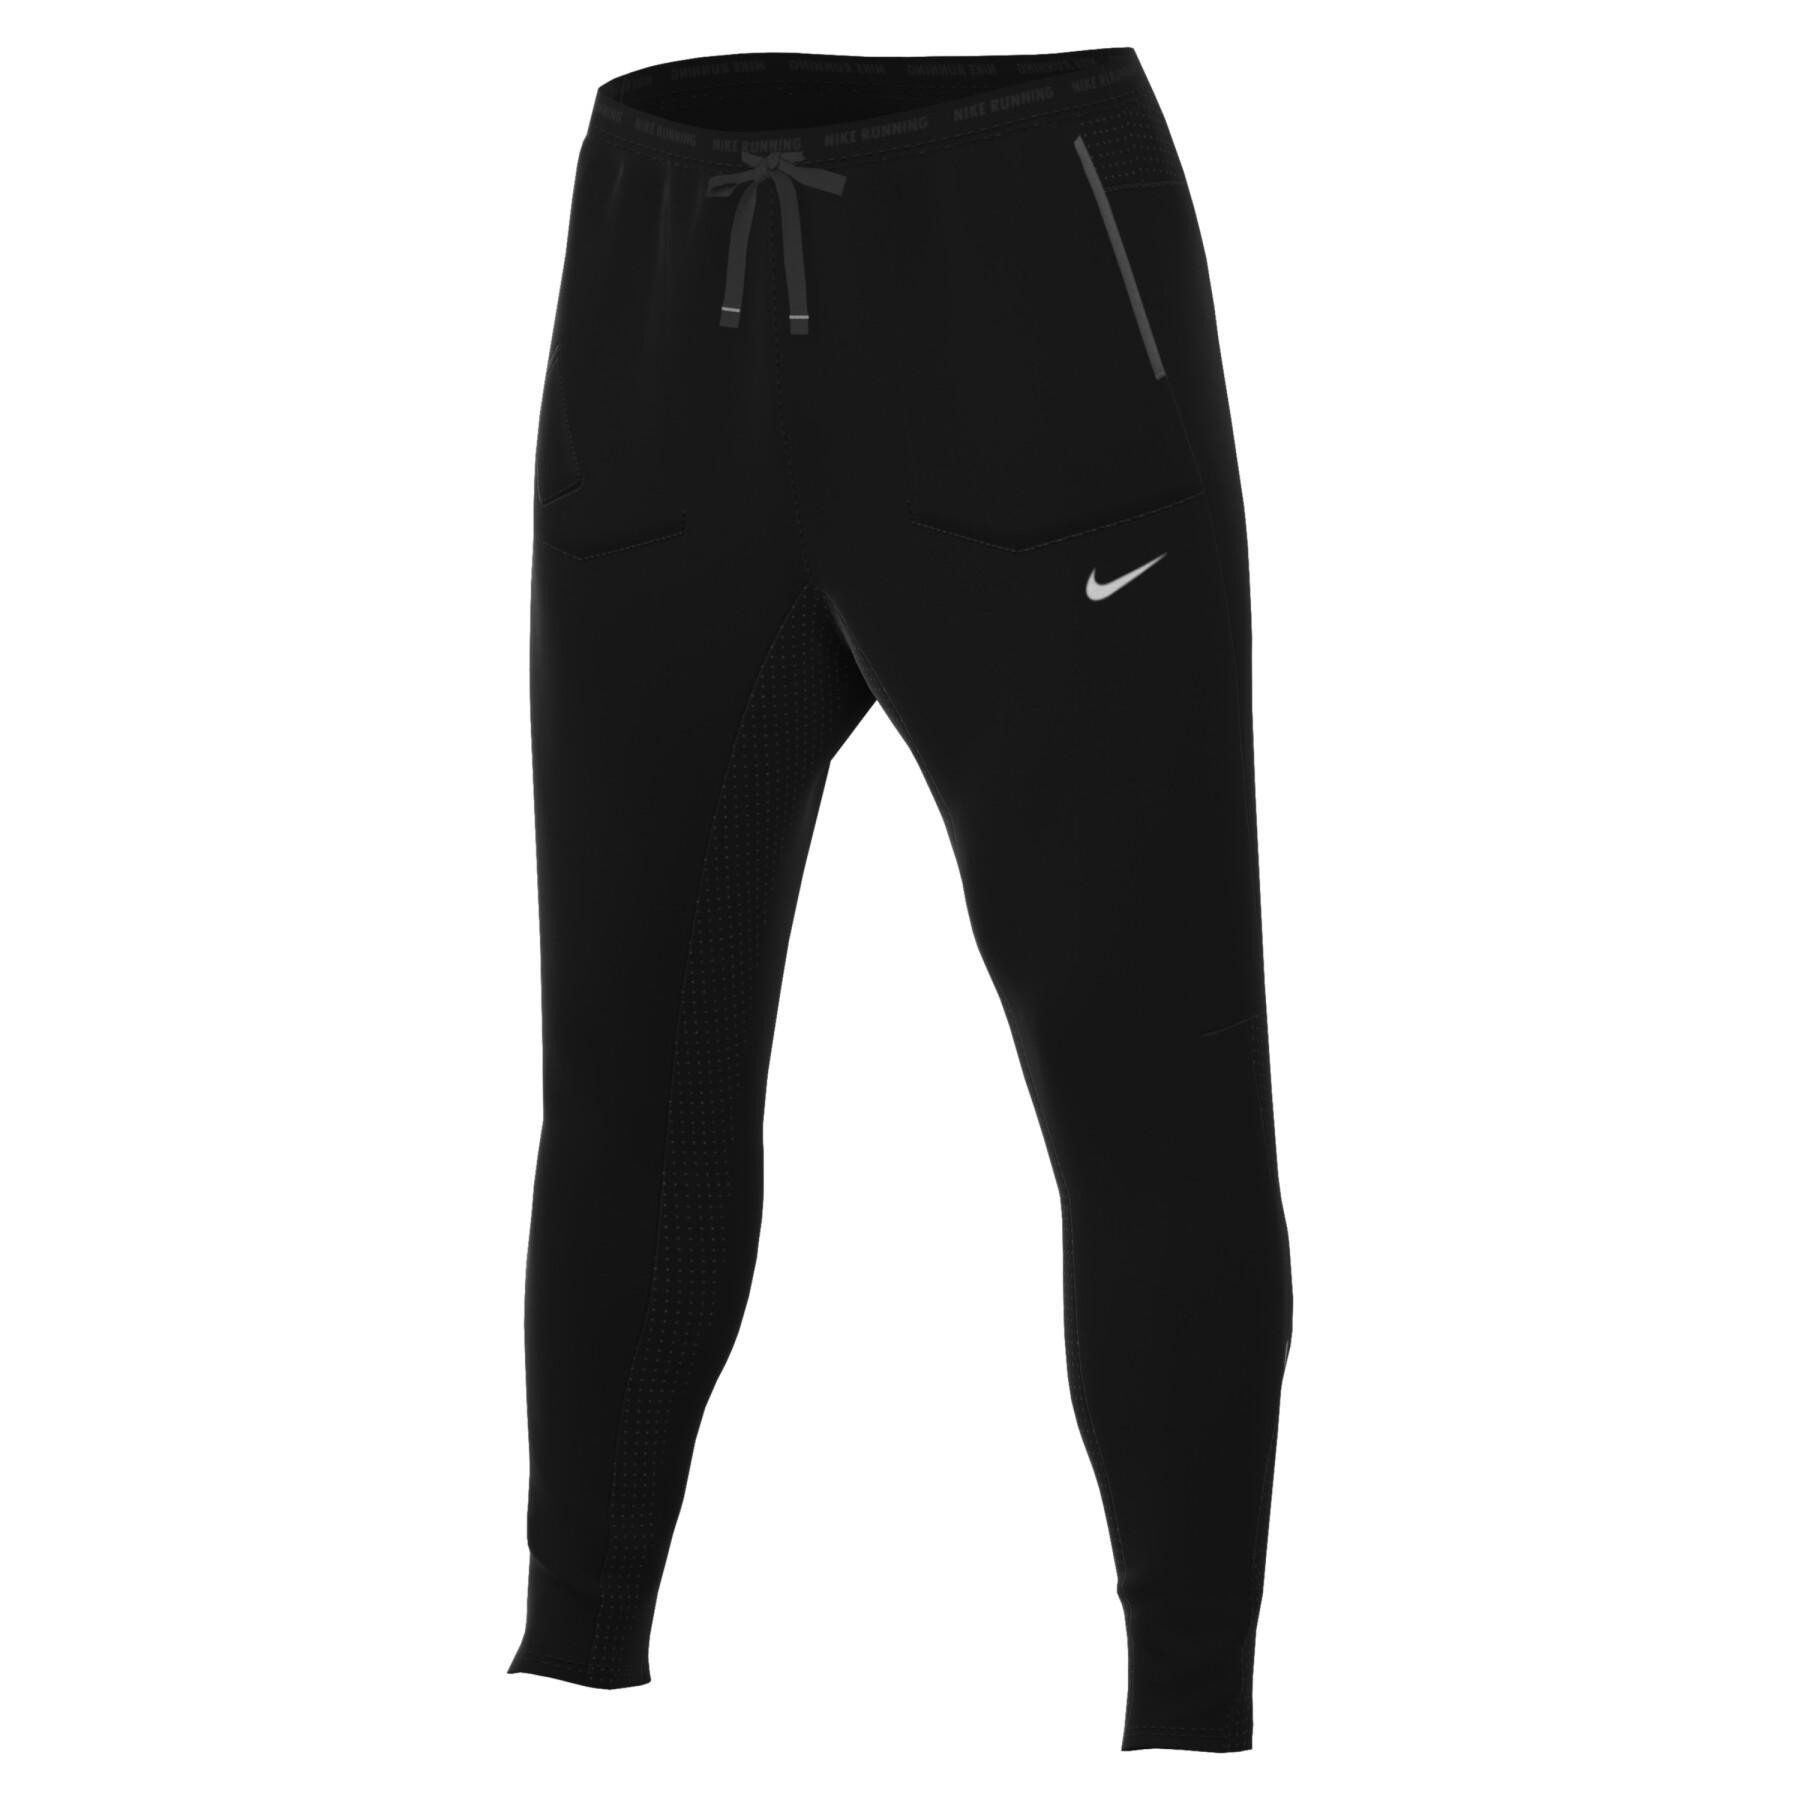 Woven jogging suit Nike Dri-FIT Phenom Elite - Clothing running - Running -  Physical maintenance